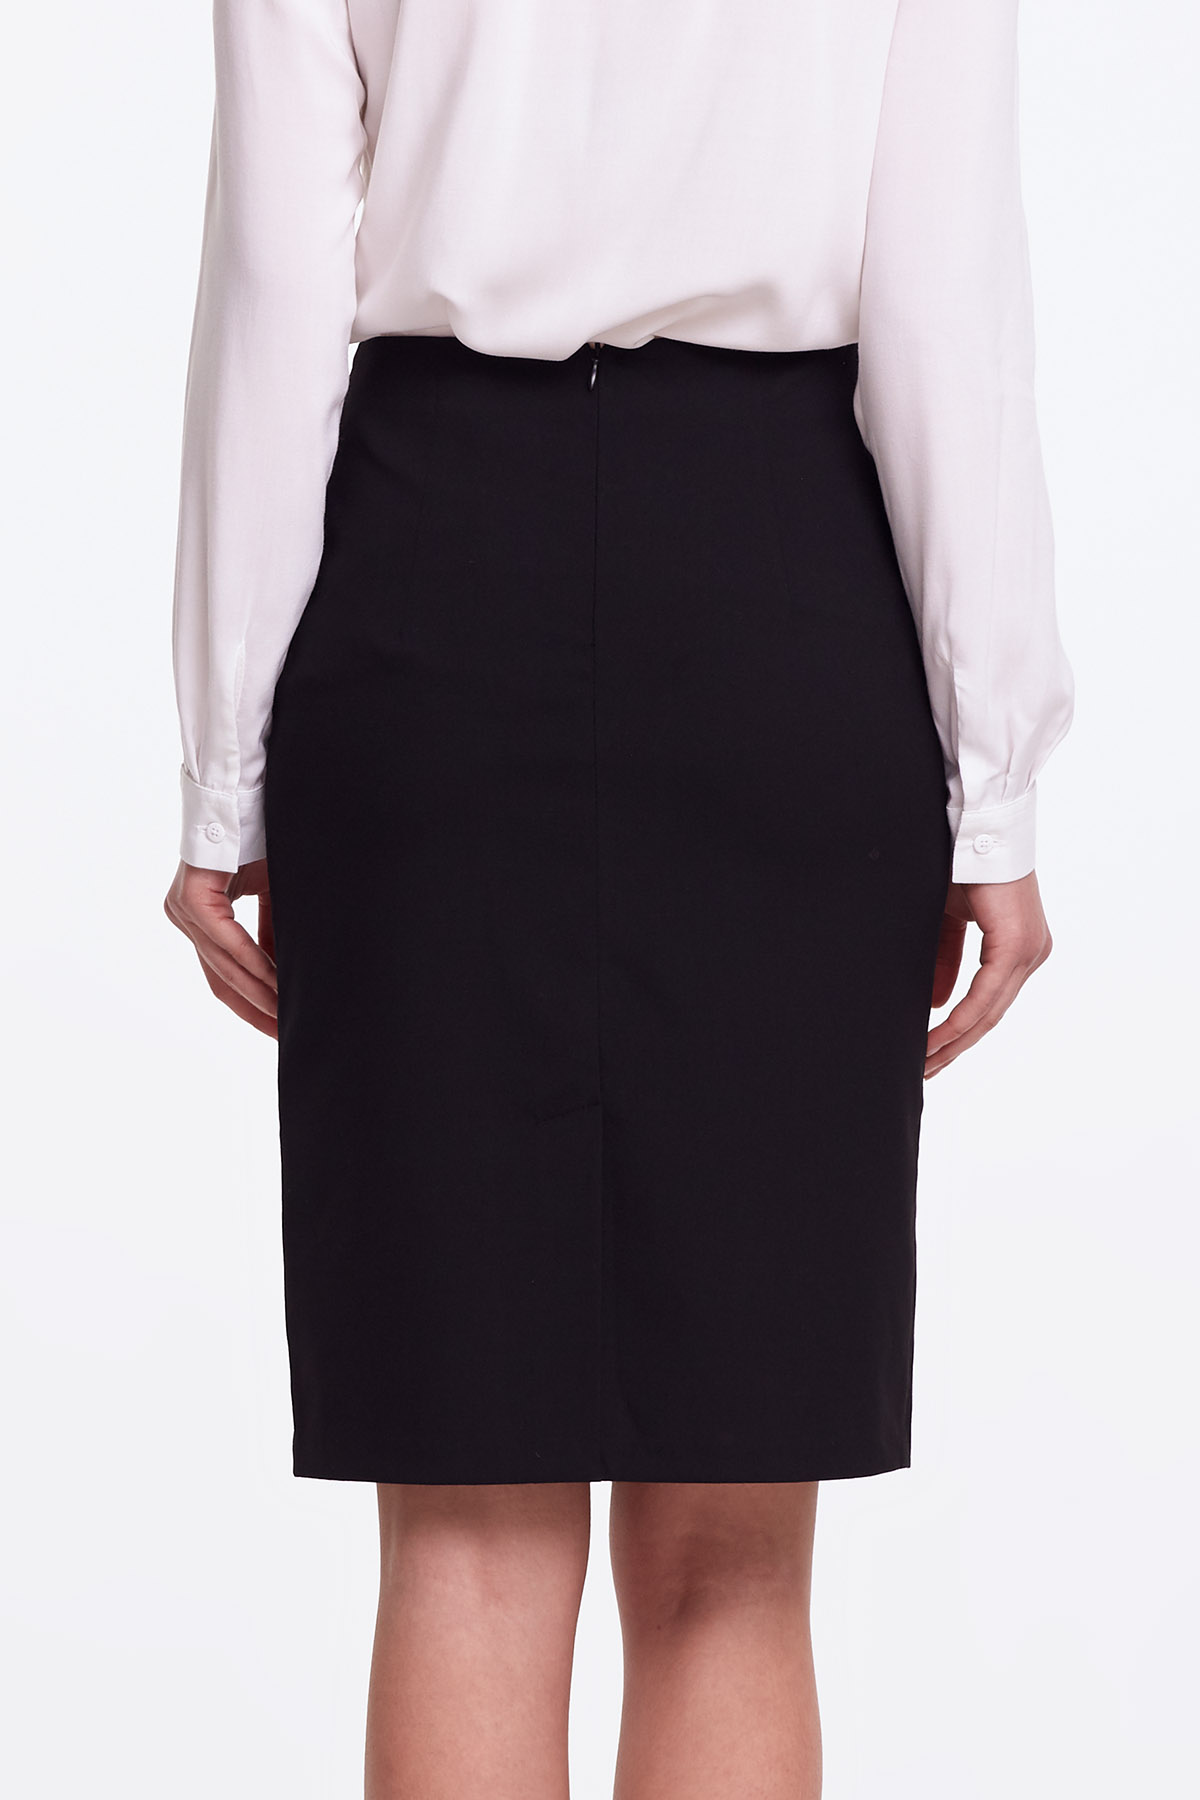 Black pencil skirt, photo 4